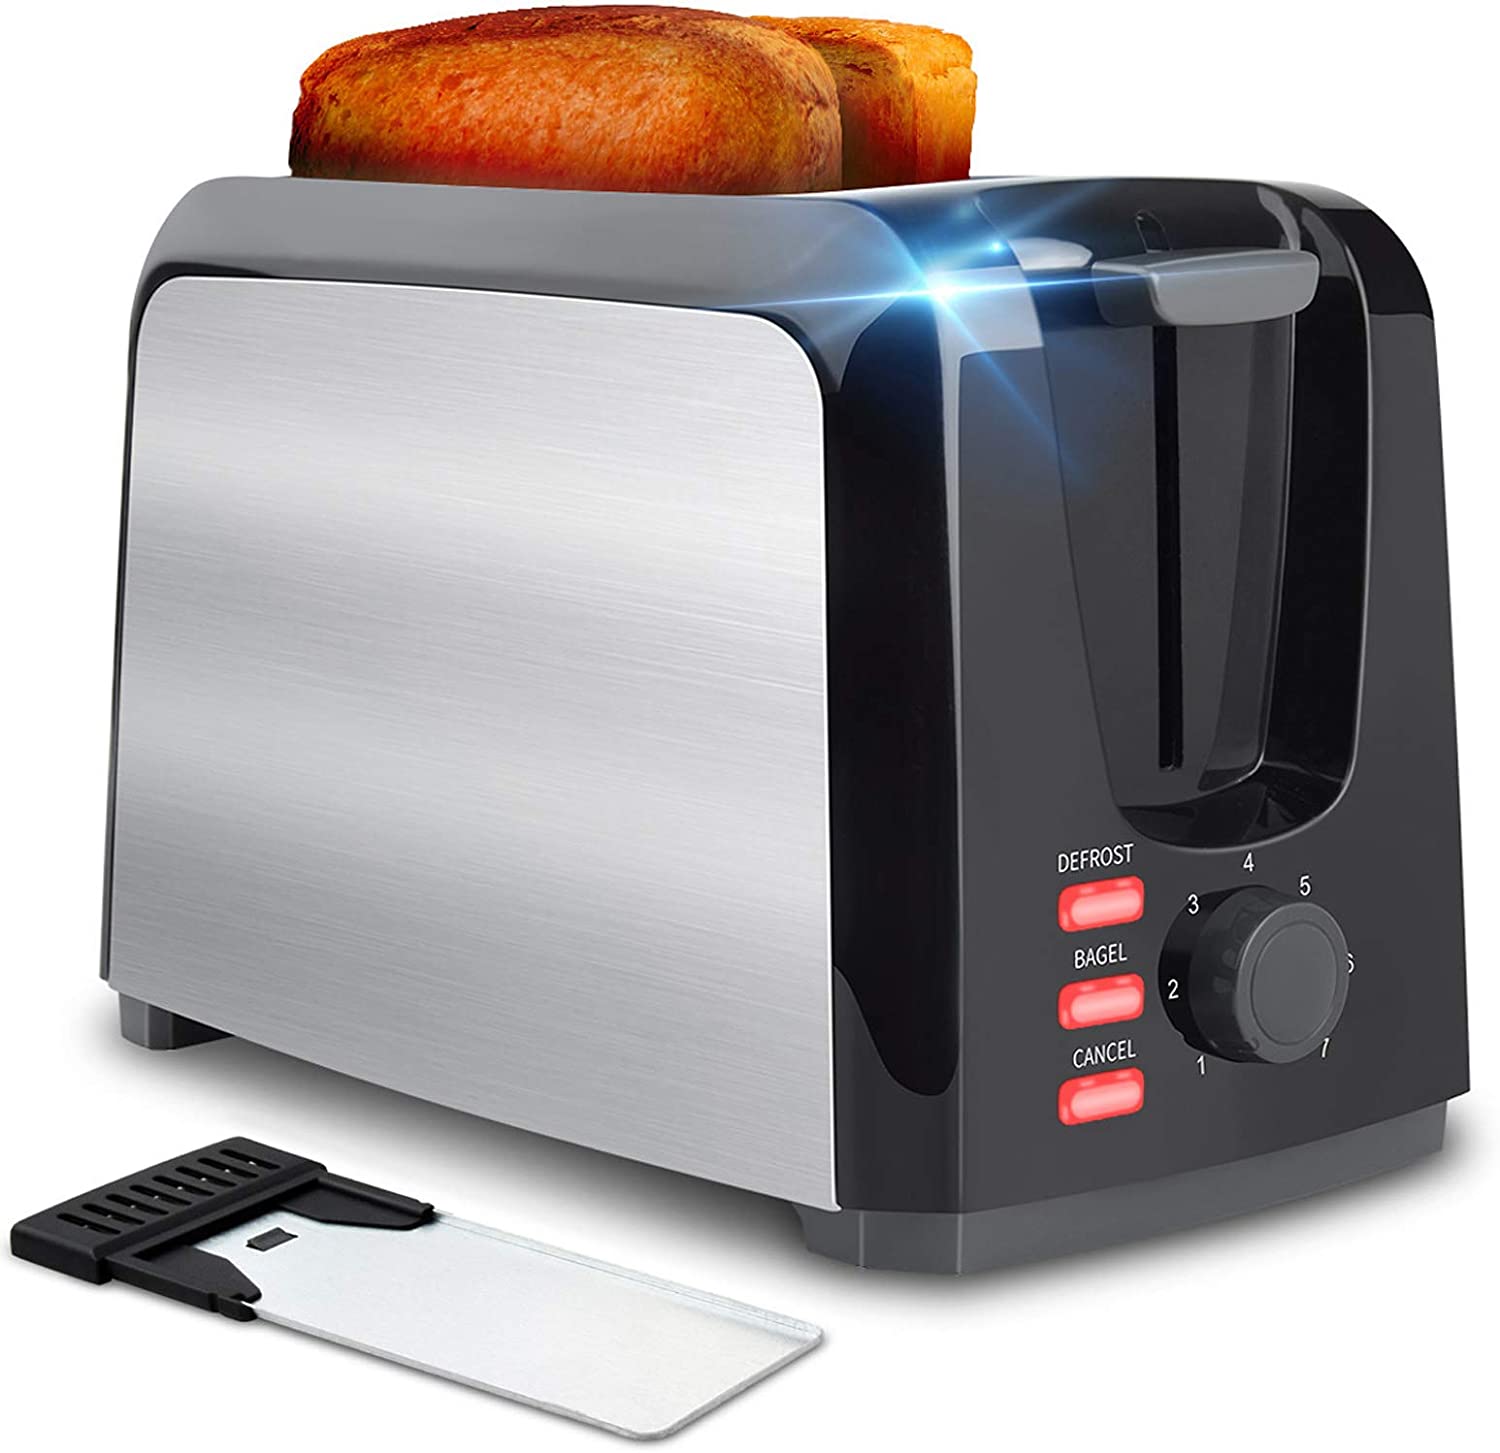 iFedio Easy Clean Metal Pop-Up Toaster, 2-Slice